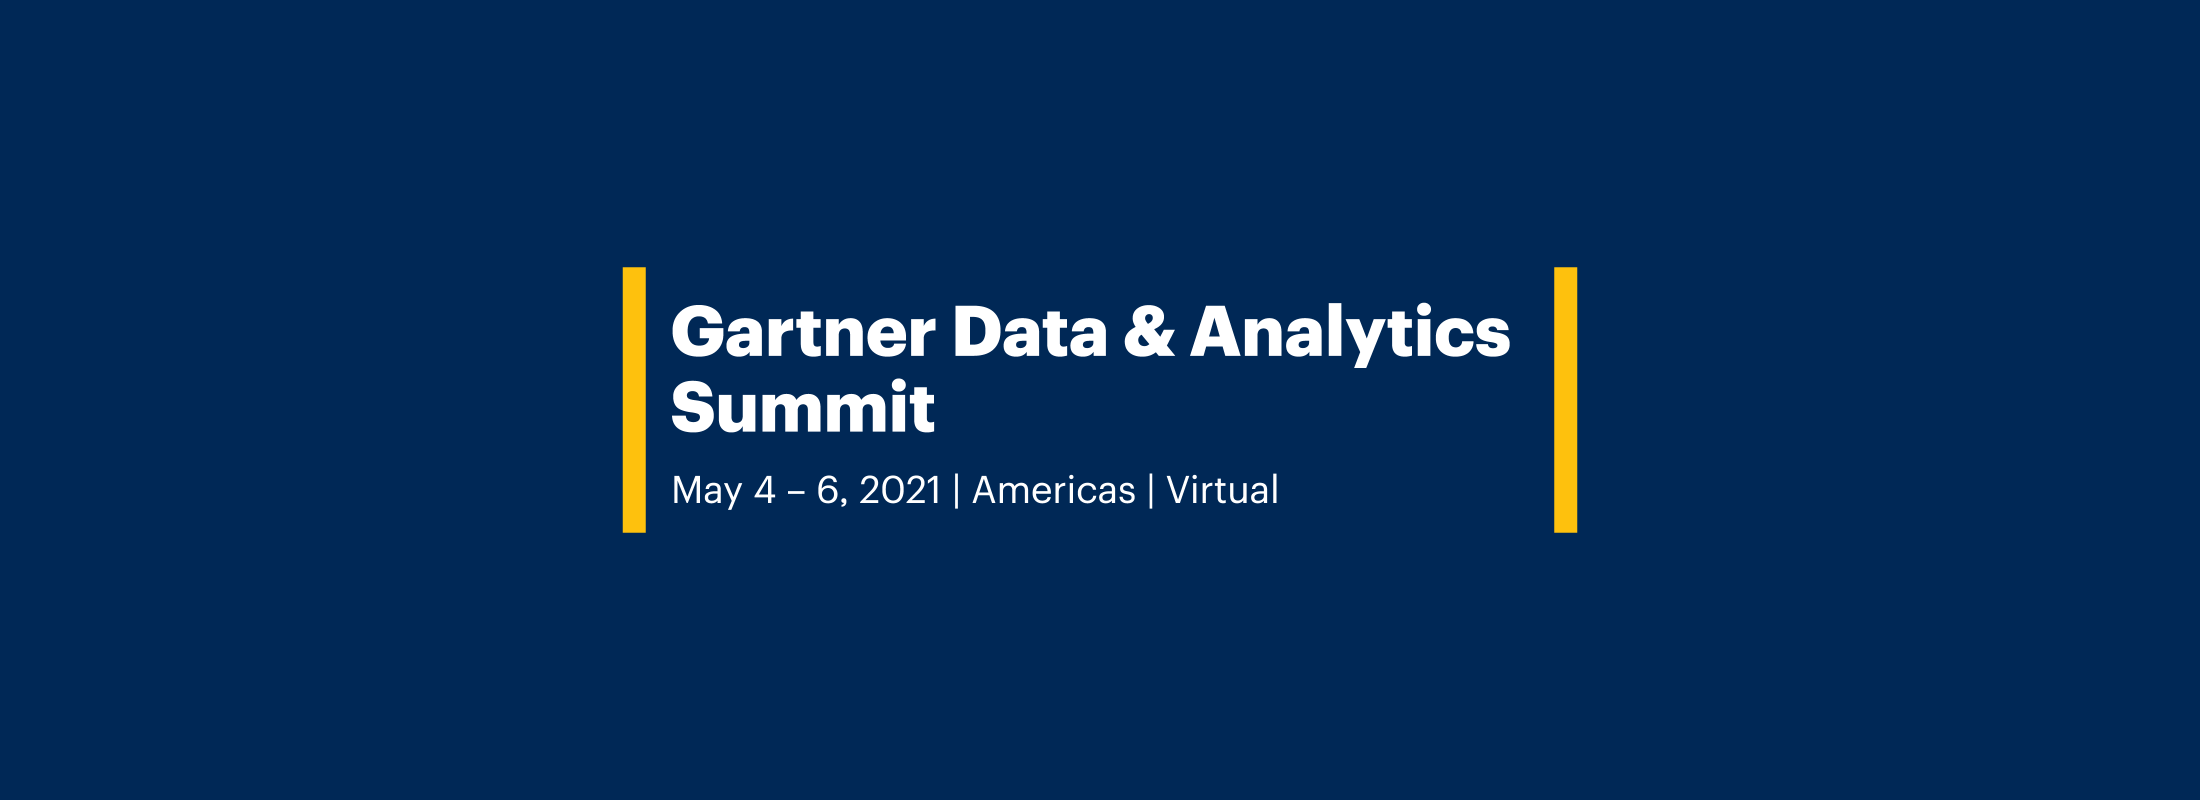 Gartner Data & Analytics Summit Immuta